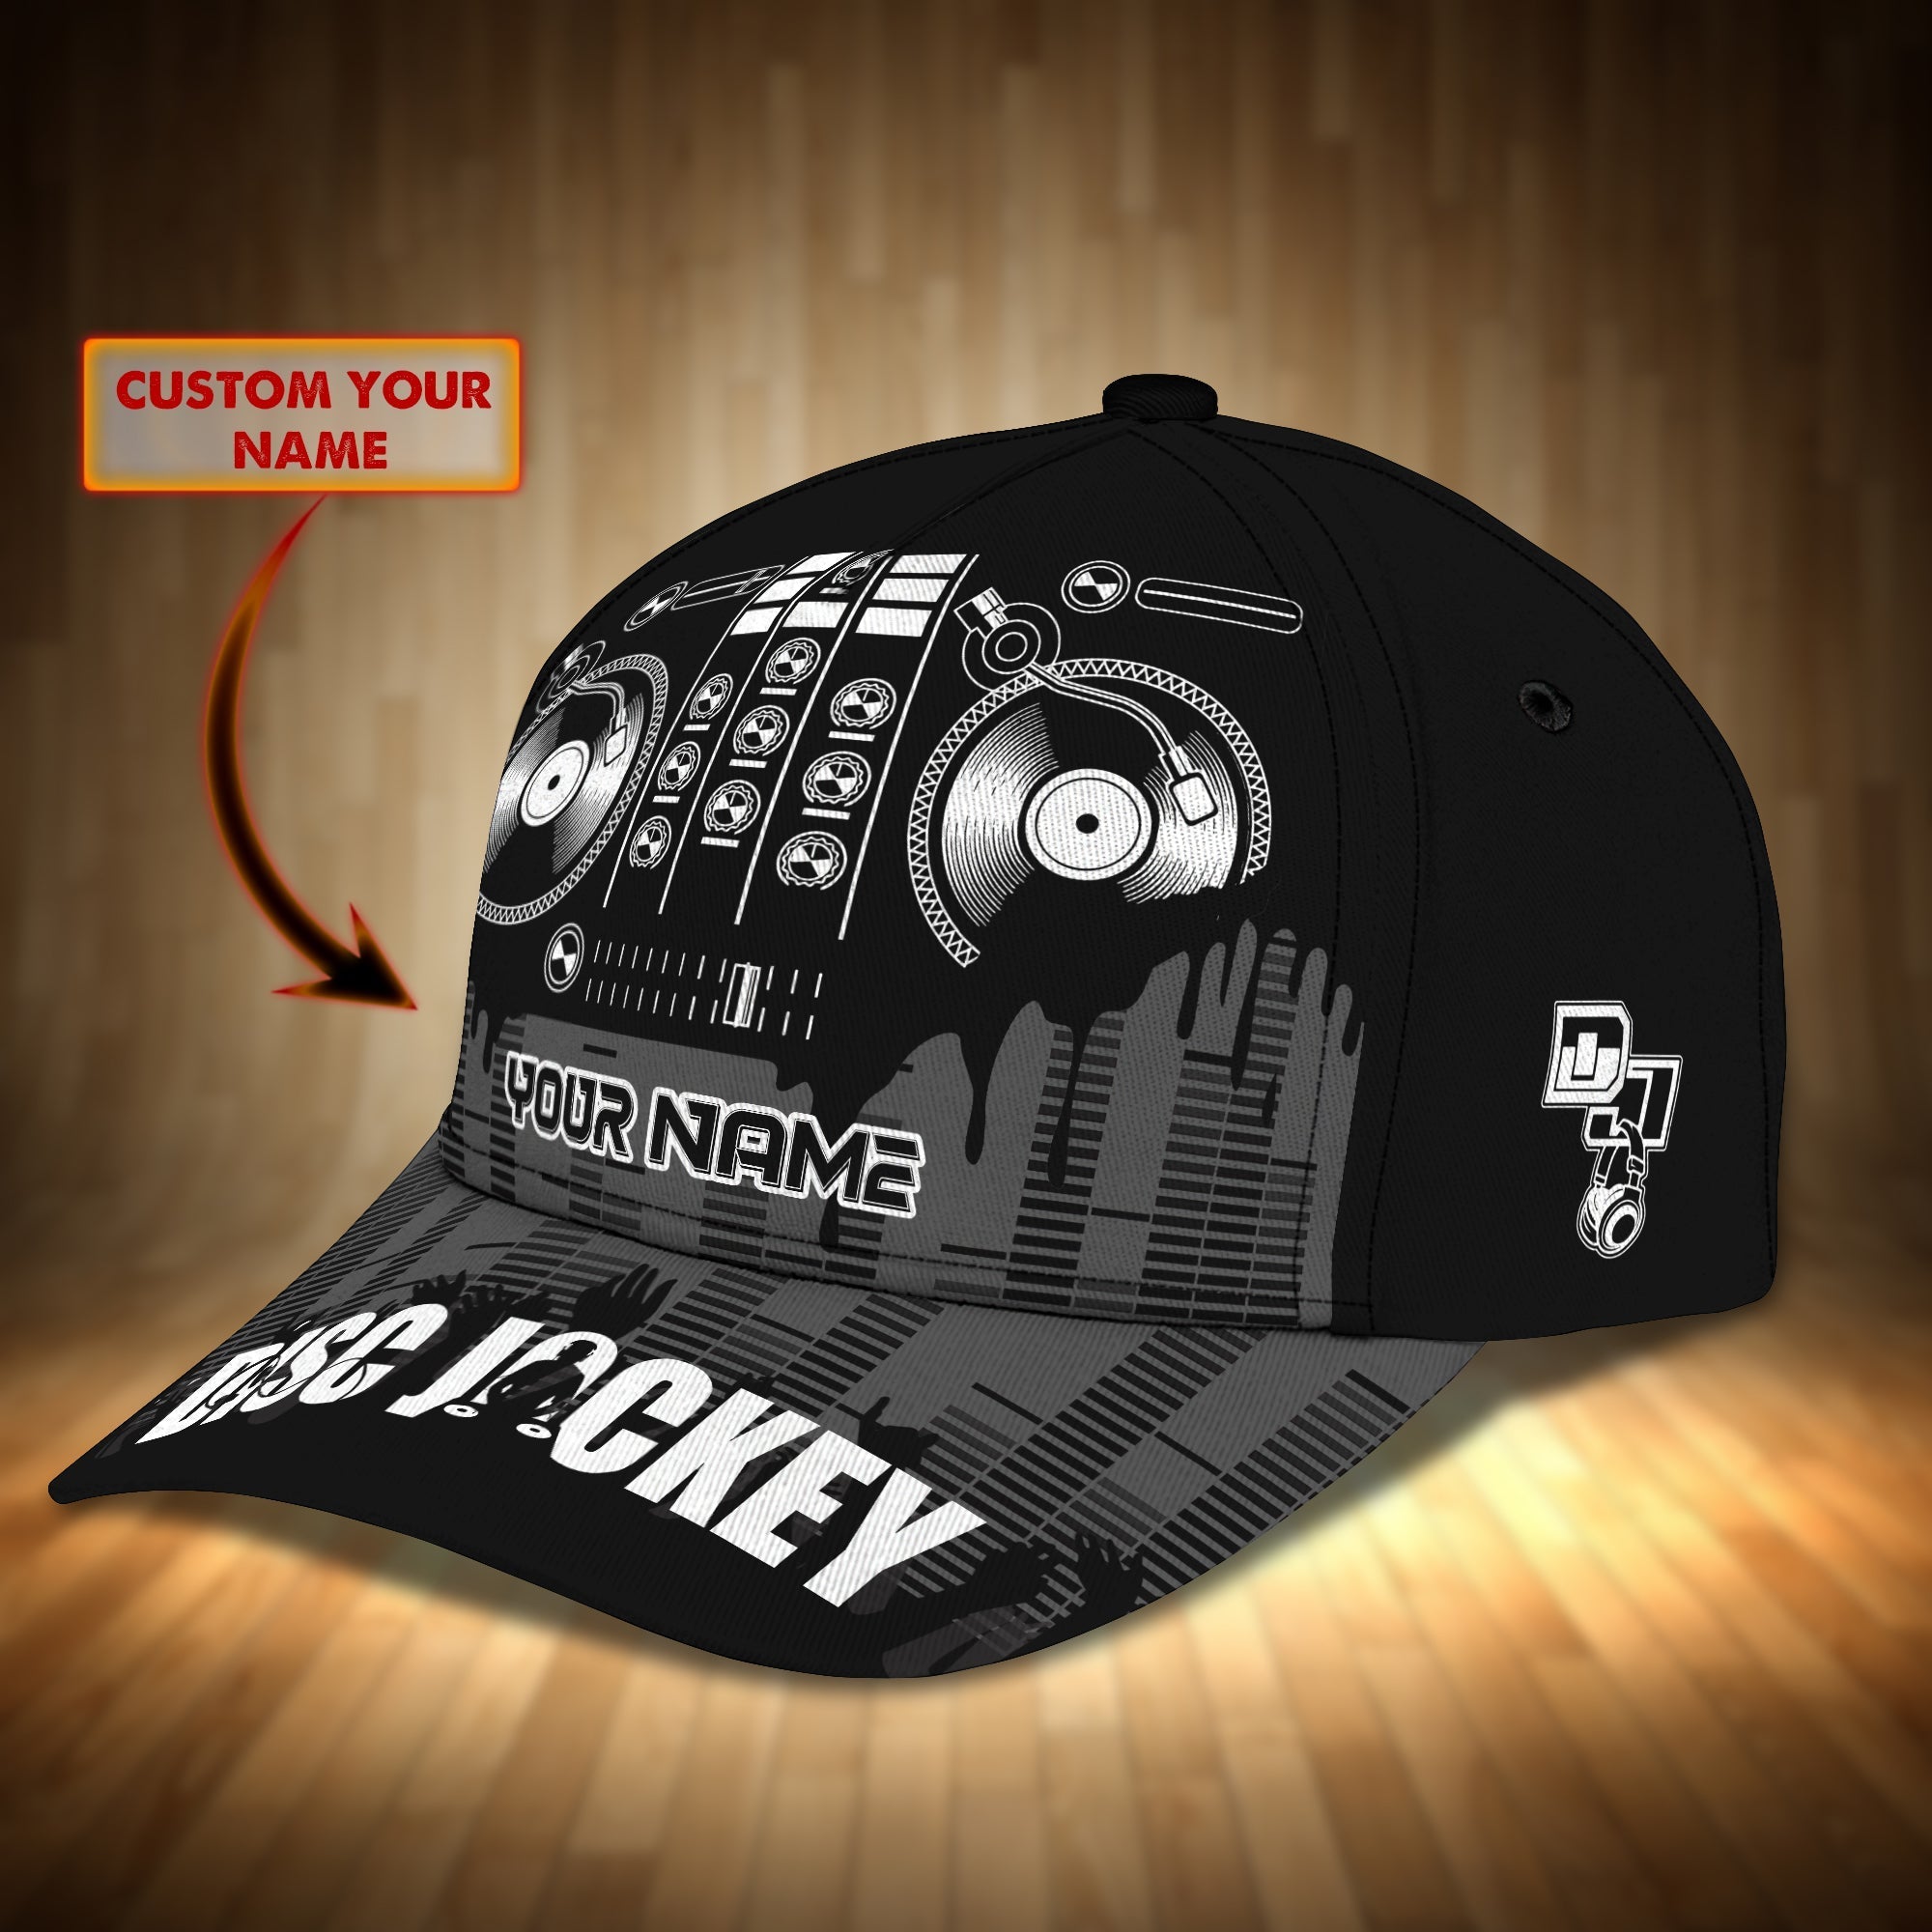 Personalized 3D Full Printed Baseball Cap Hat For A Disc Jockey/ Dj Cap/ Dj Hat For Him/ Her